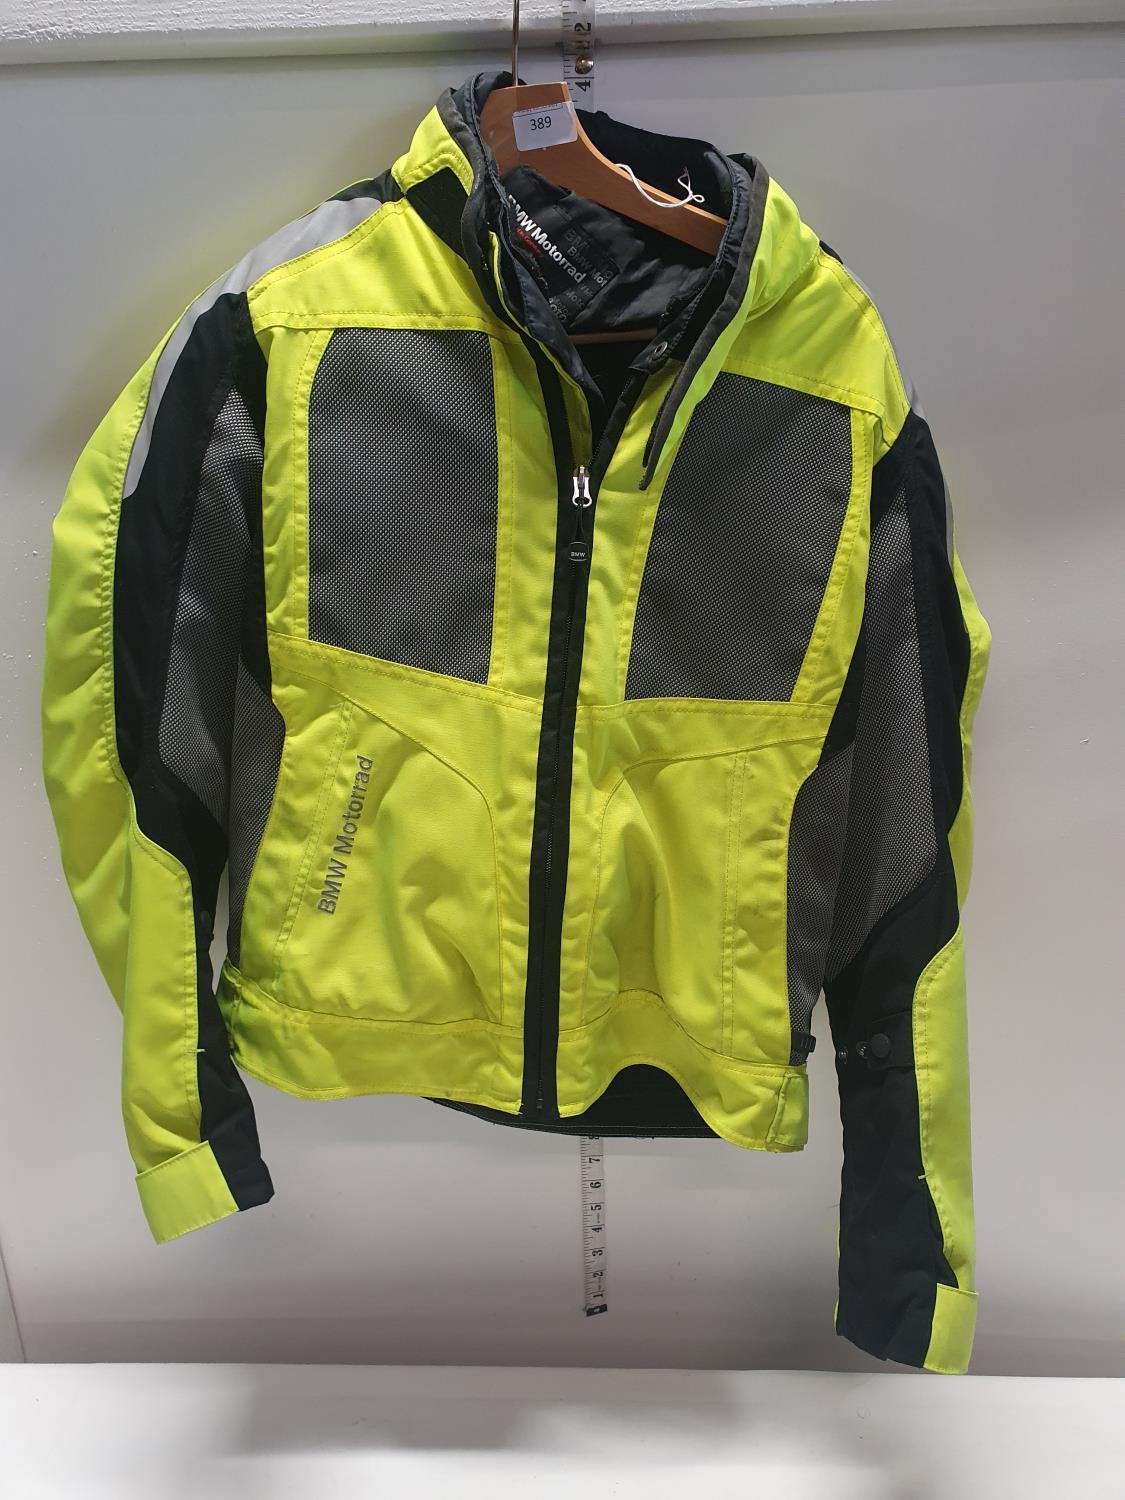 A BMW Motorrad motorcycle jacket size 52